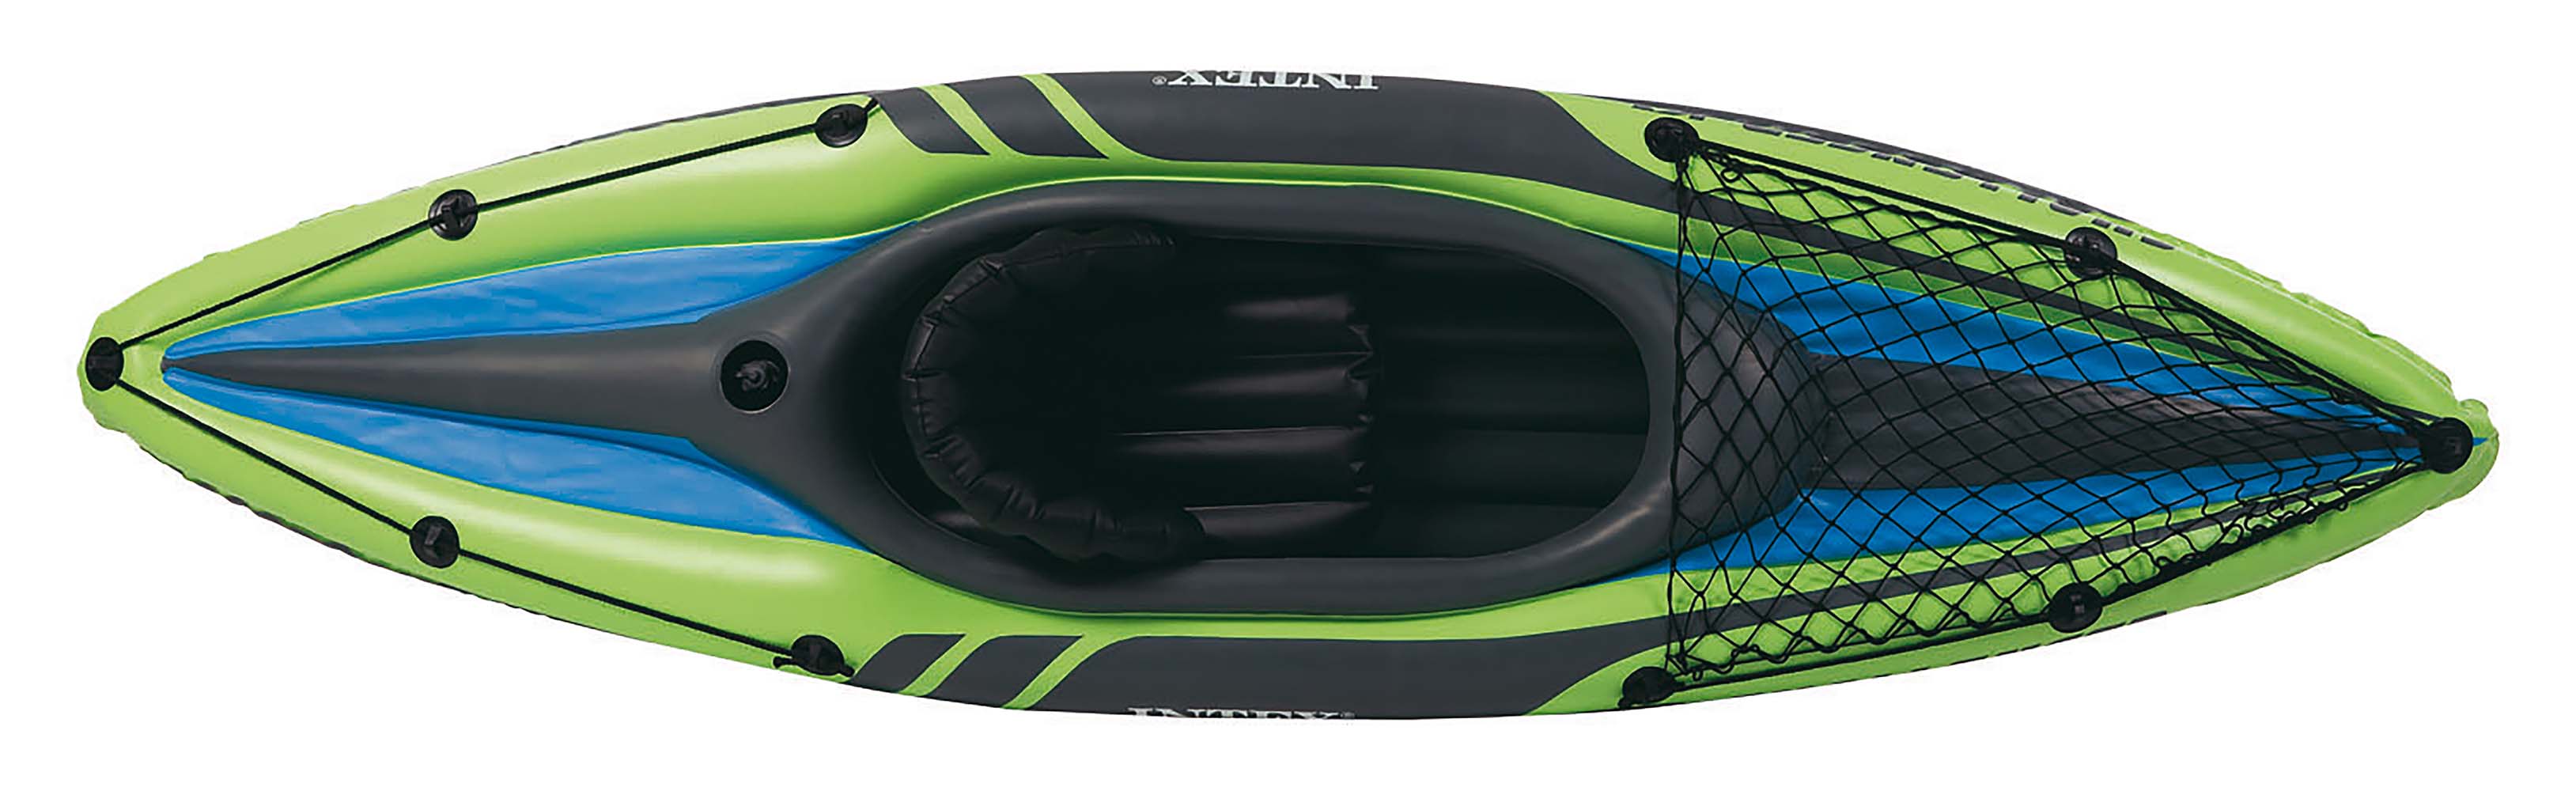 Intex - Kayak Challenger K1 274x76x38cm